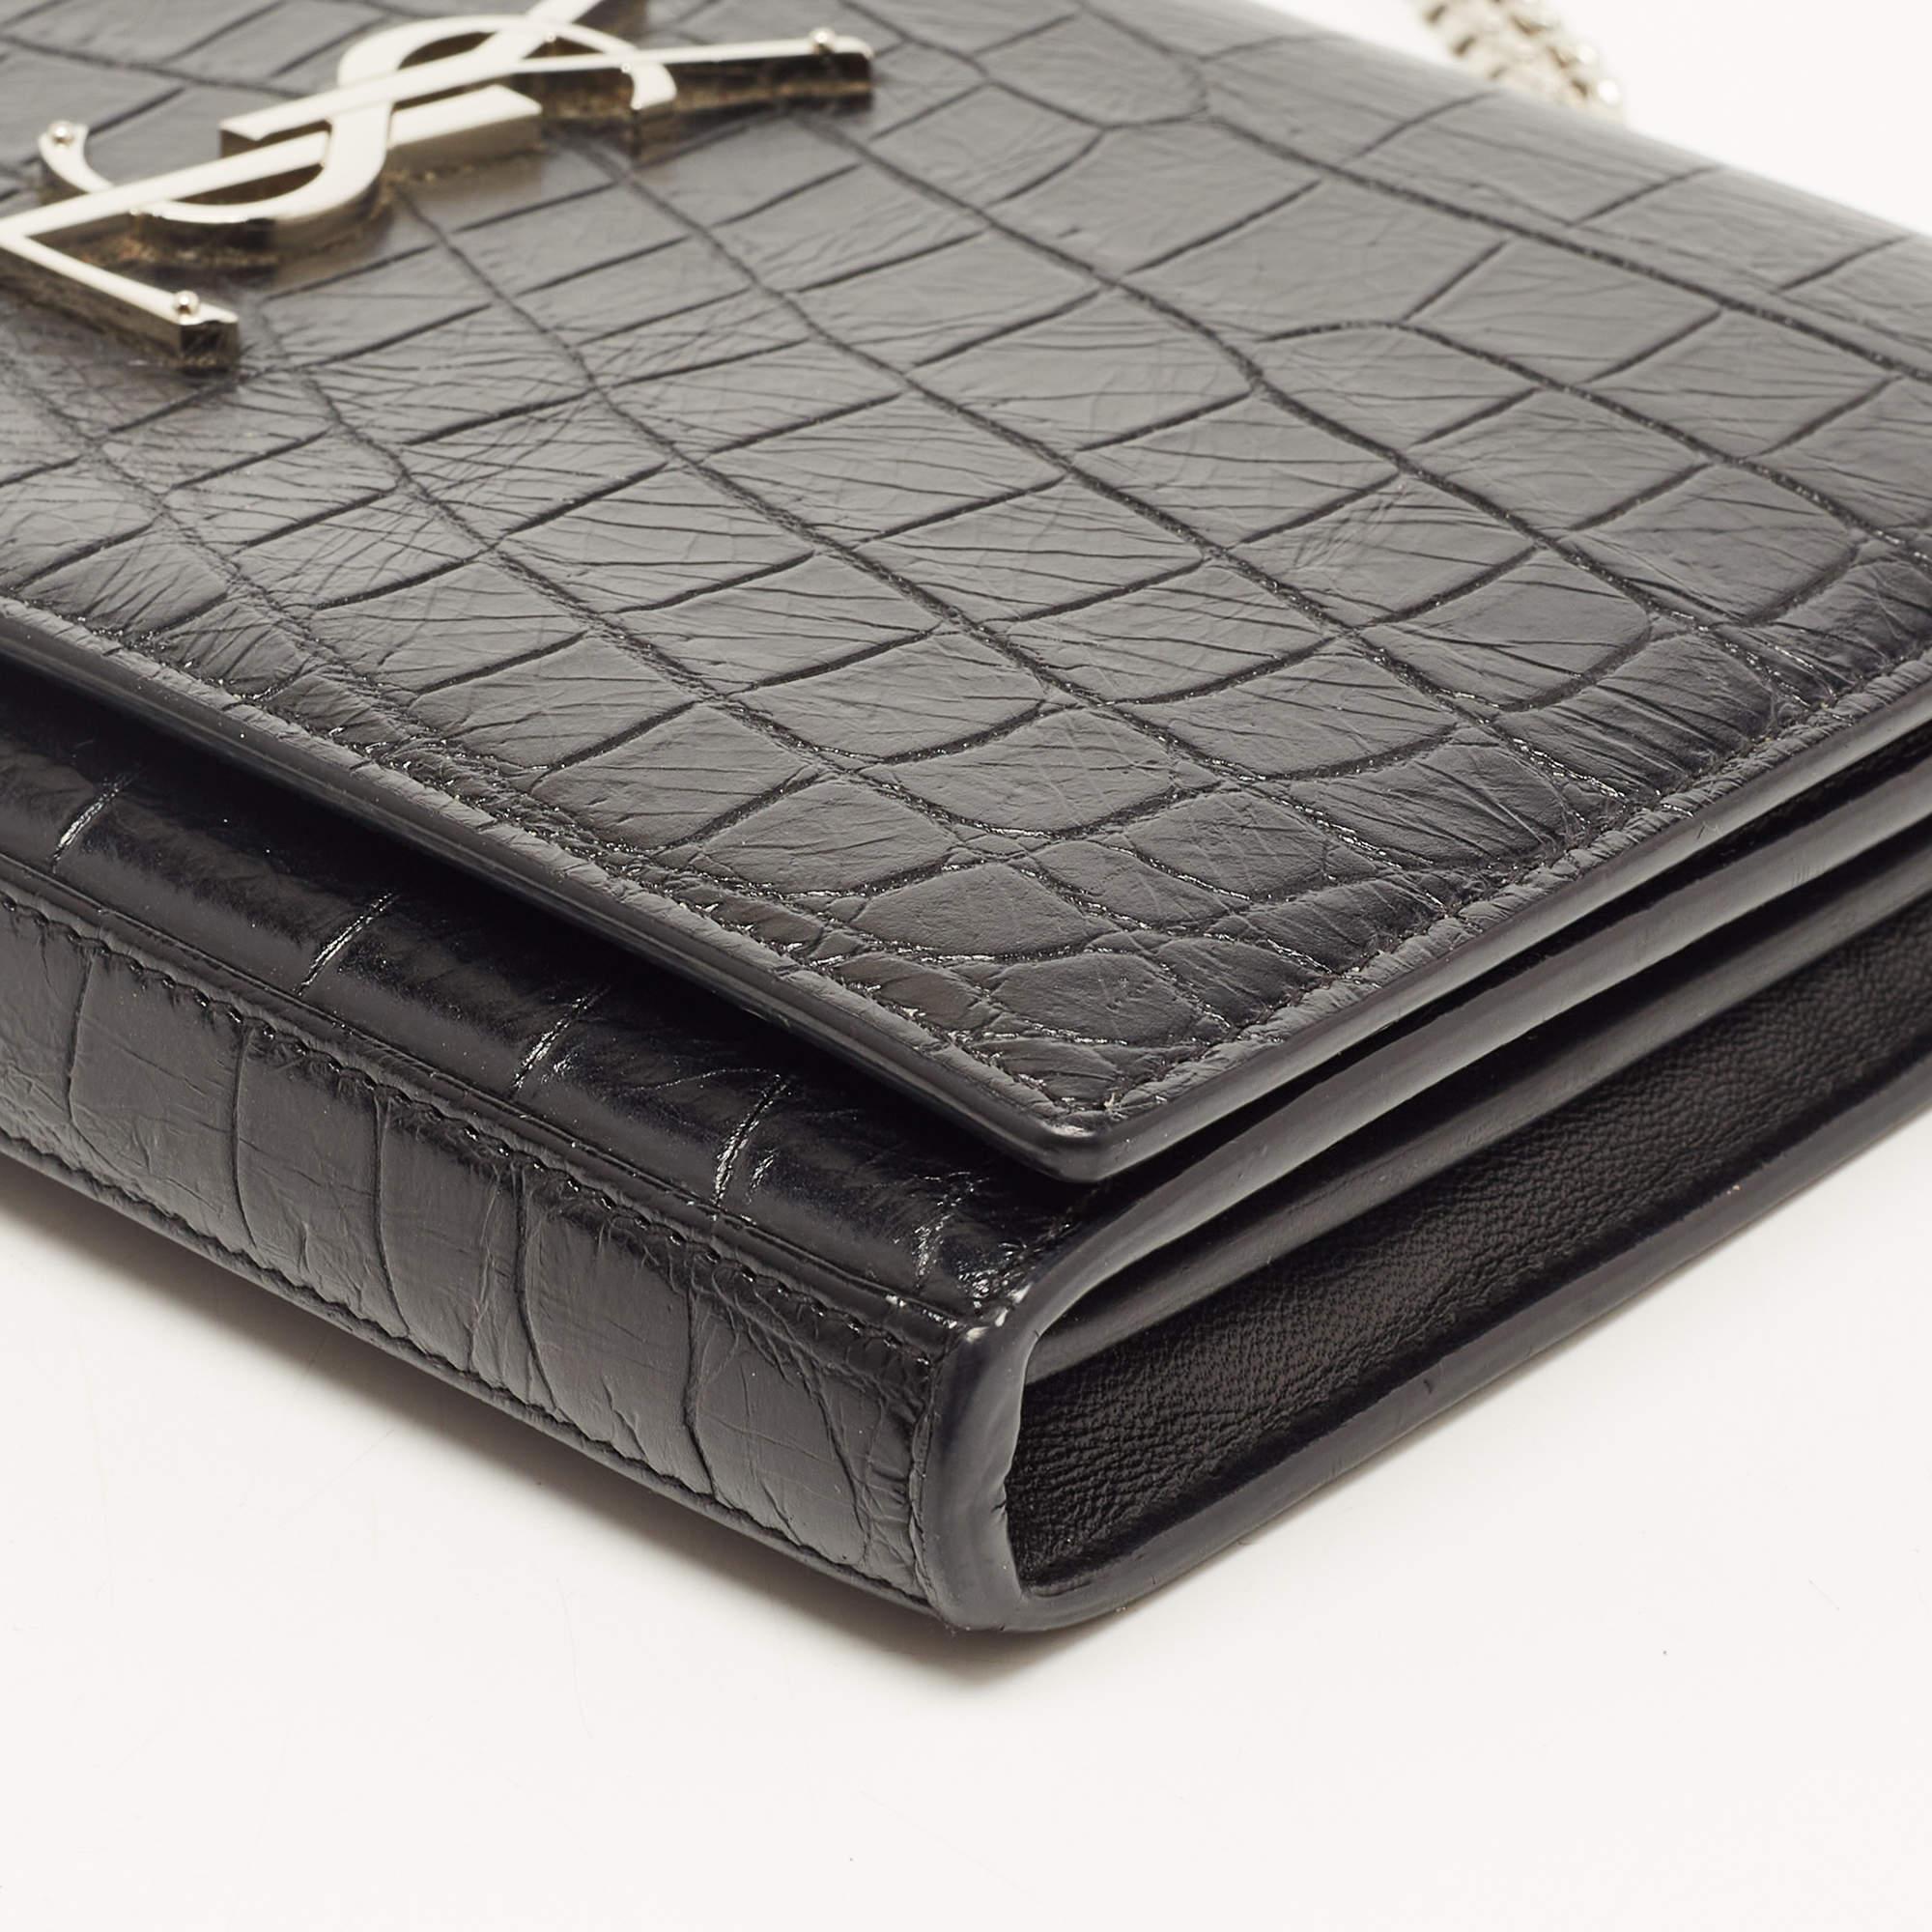 Saint Laurent Black Croc Embossed Leather Kate Clutch For Sale 2